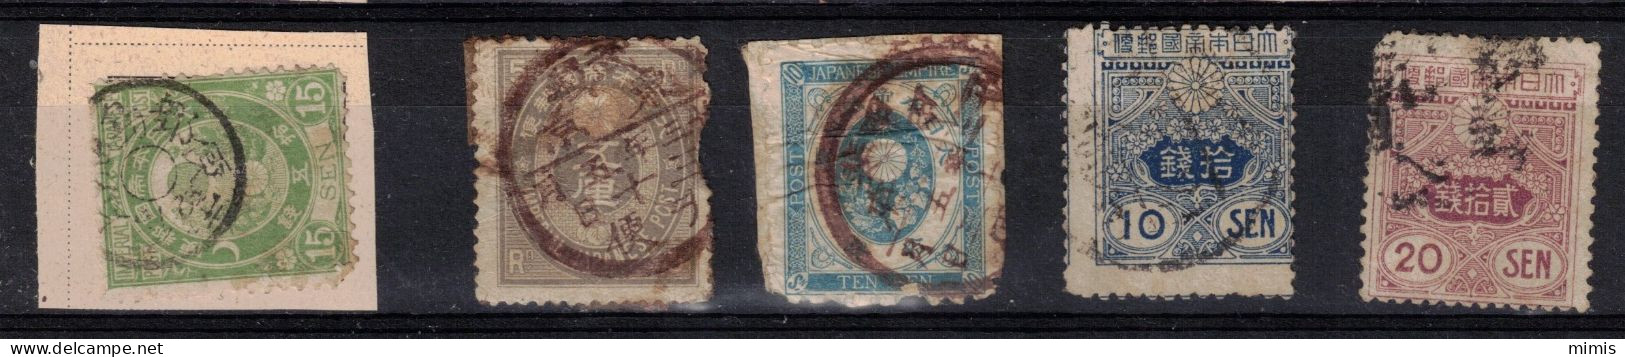 JAPON             1876    N°56-54  124-125 (1913) Oblitérés - Used Stamps